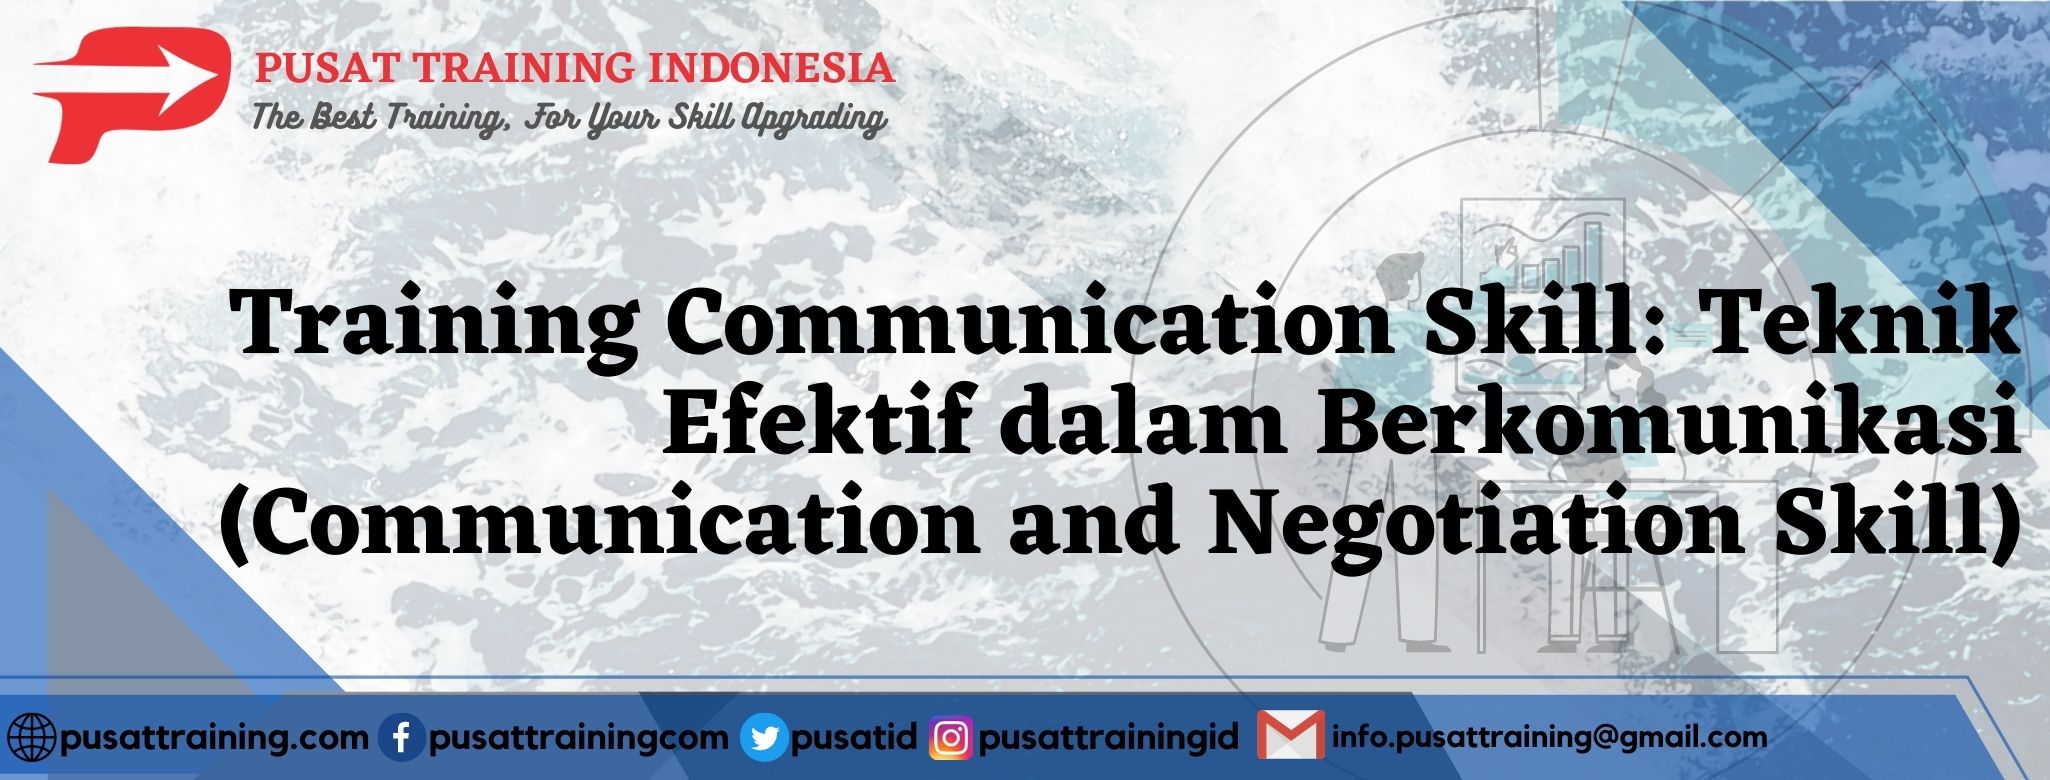 Communication-Skill_-Teknik-Efektif-dalam-Berkomunikasi-Communication-and-Negotiation-Skill